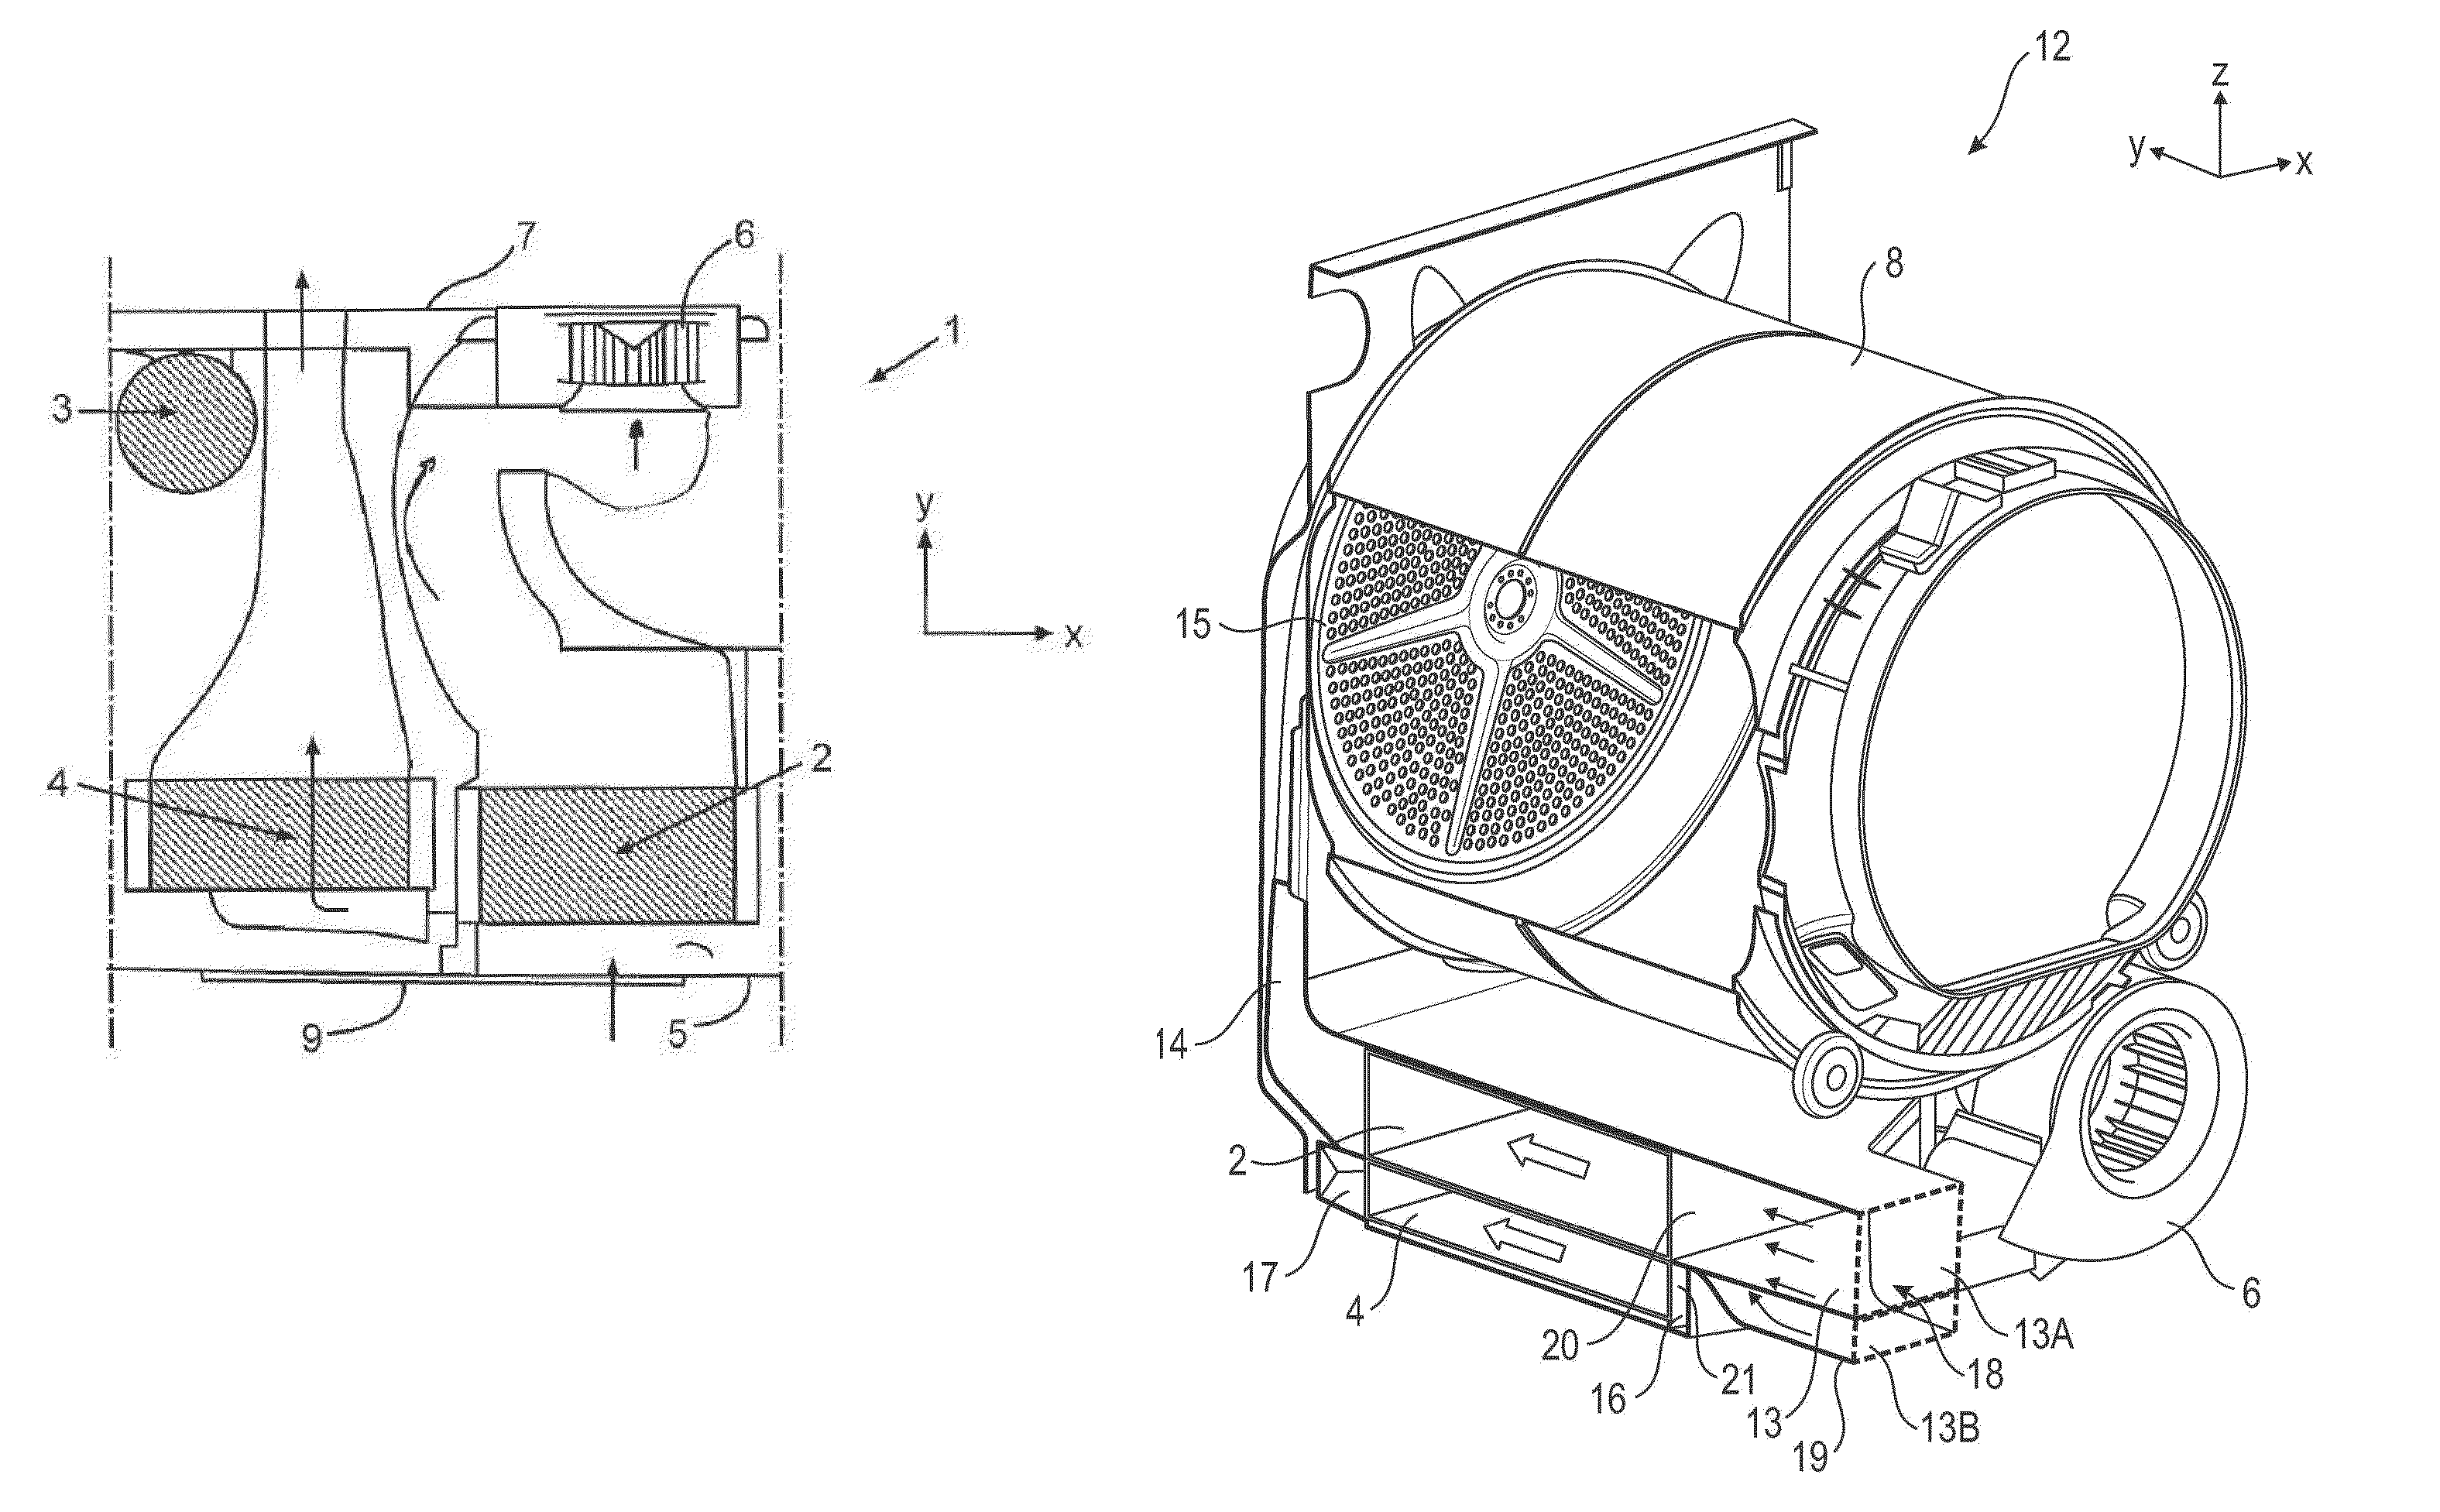 Exhaust air dryer with heat exchanger